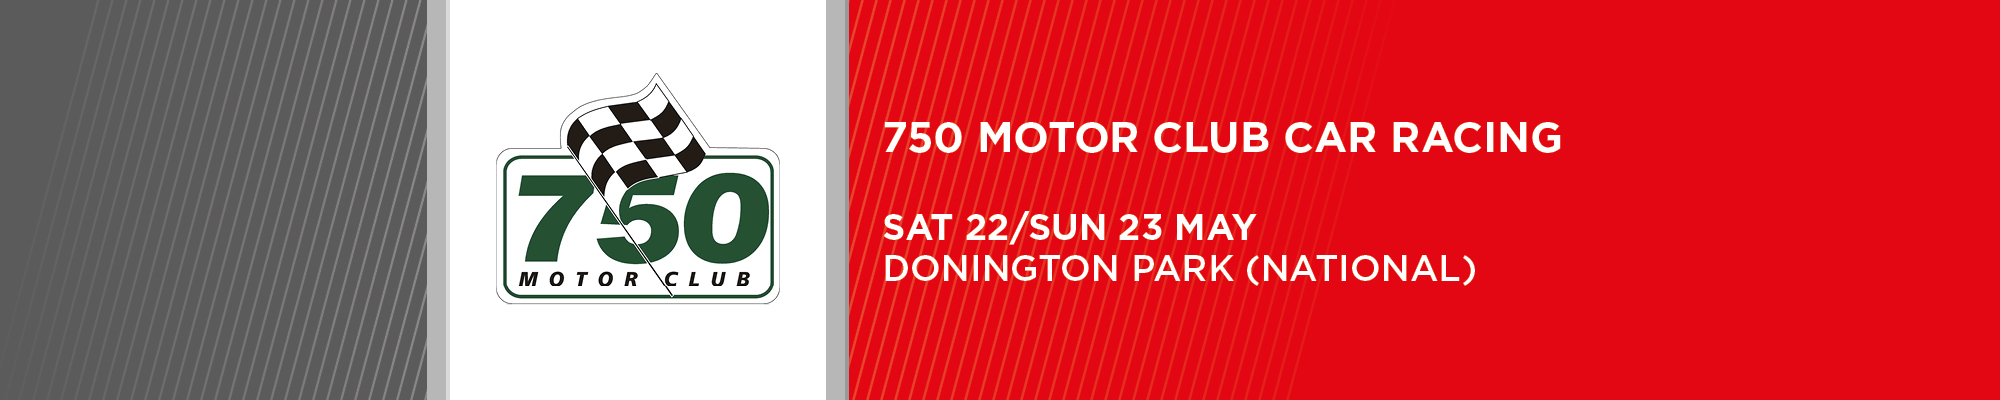 750 Motor Club Car Racing